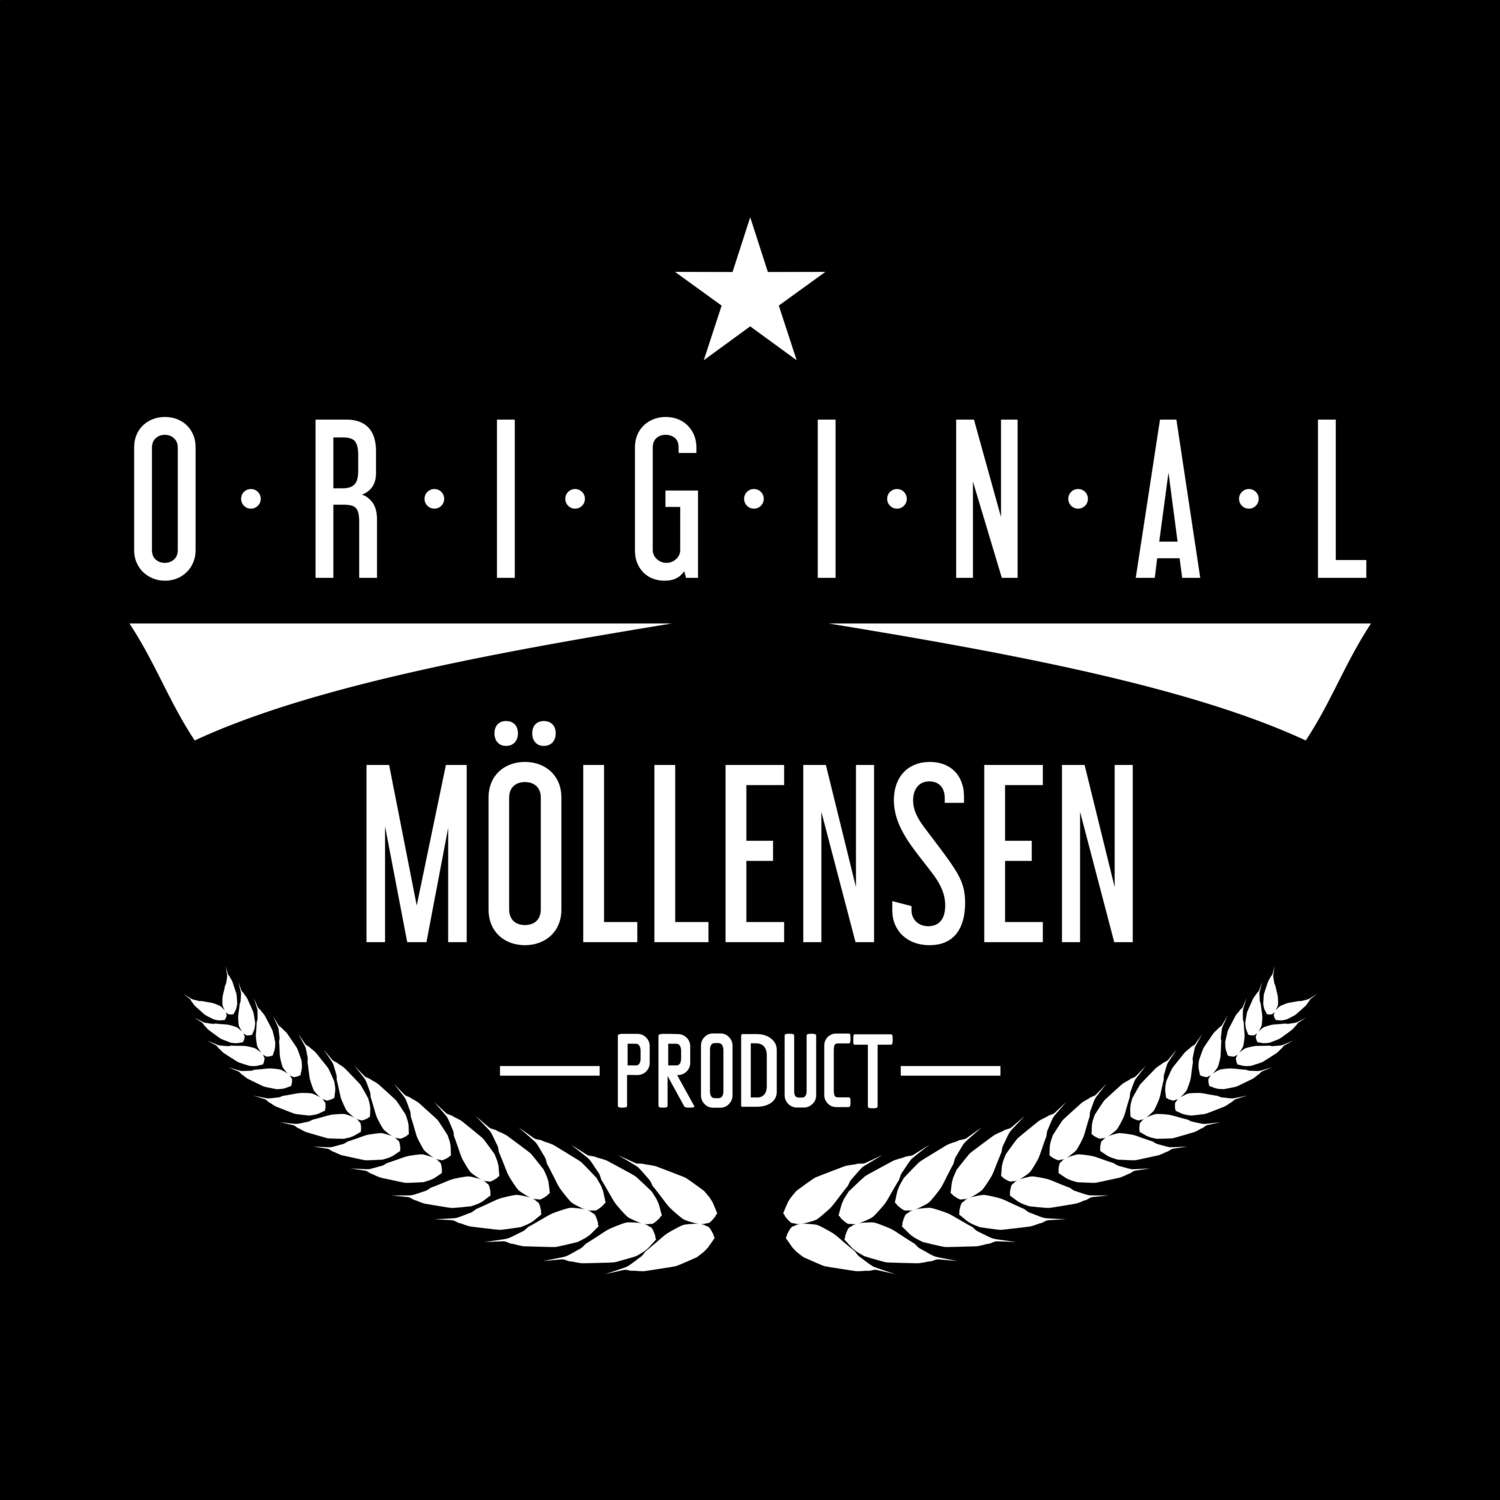 Möllensen T-Shirt »Original Product«